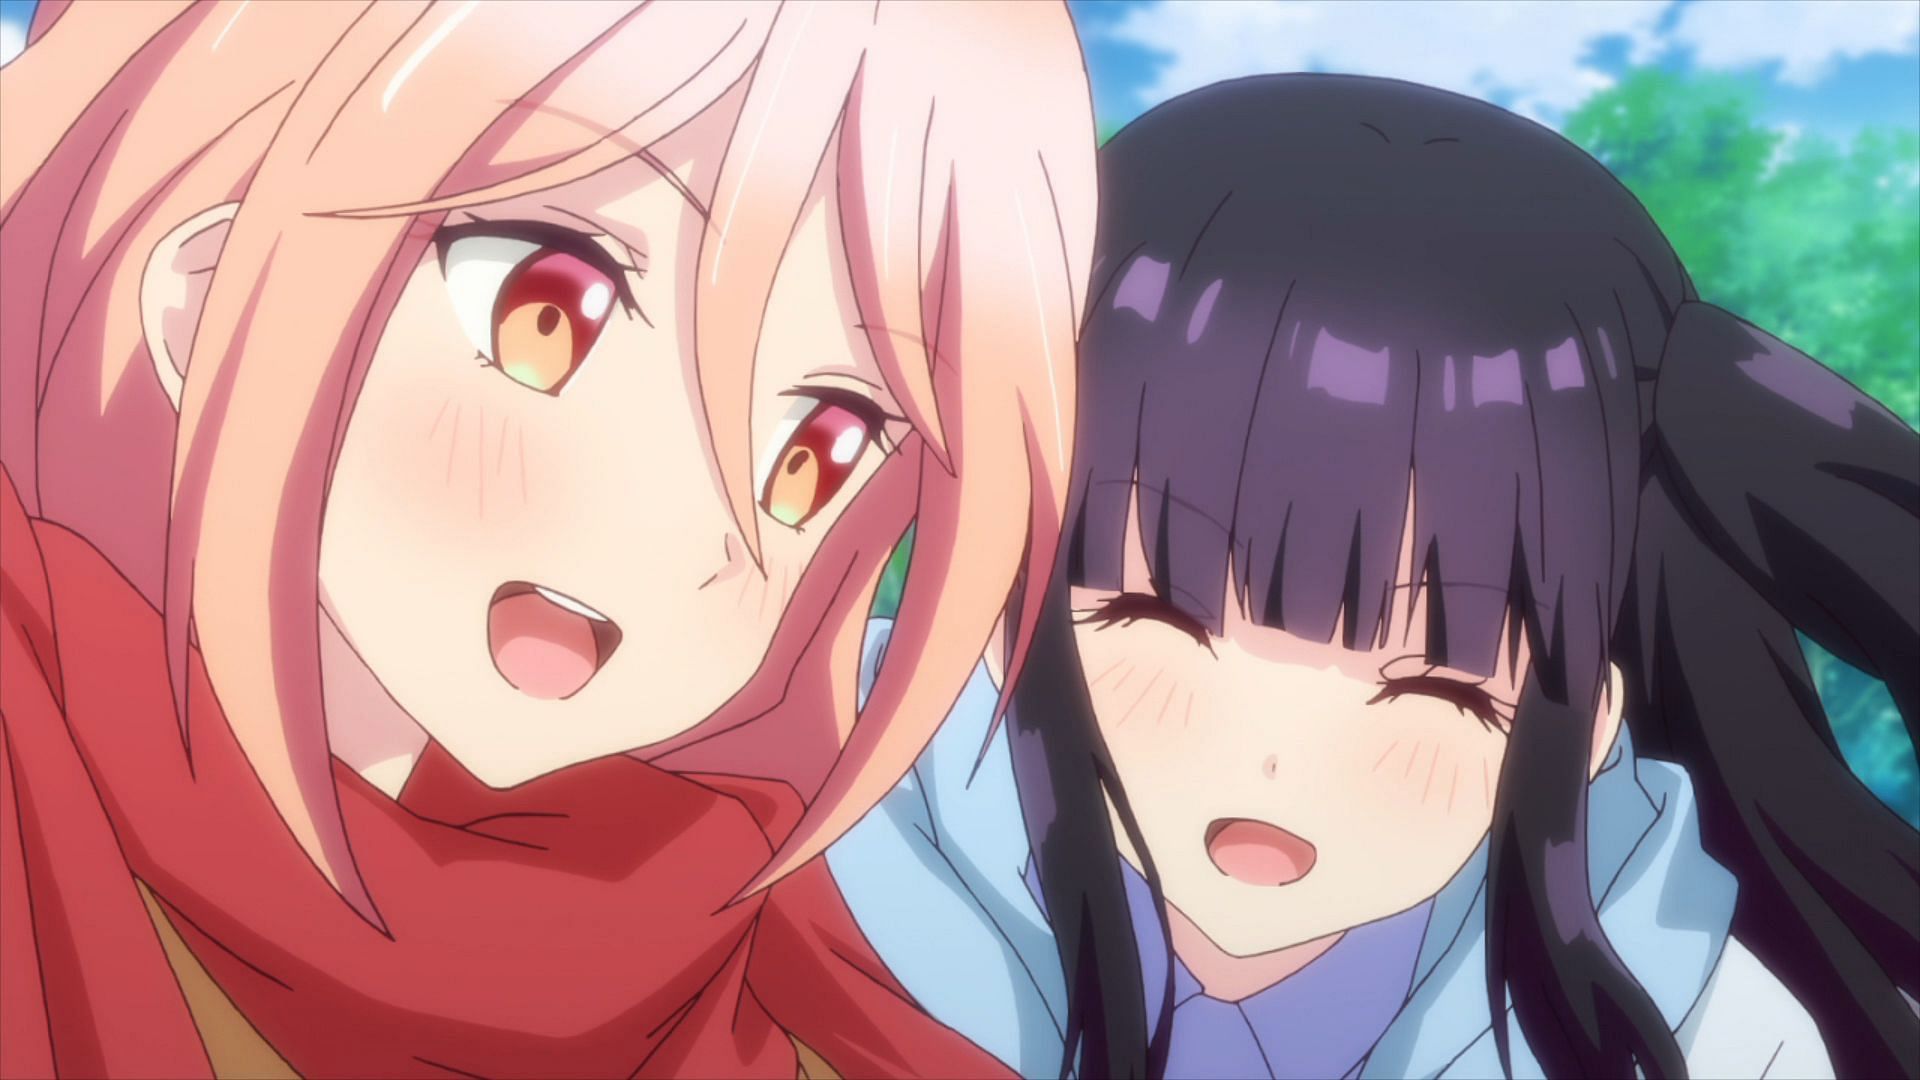 Hotaru and Yuma as shown in the anime (Image via Netsuzou Trap)